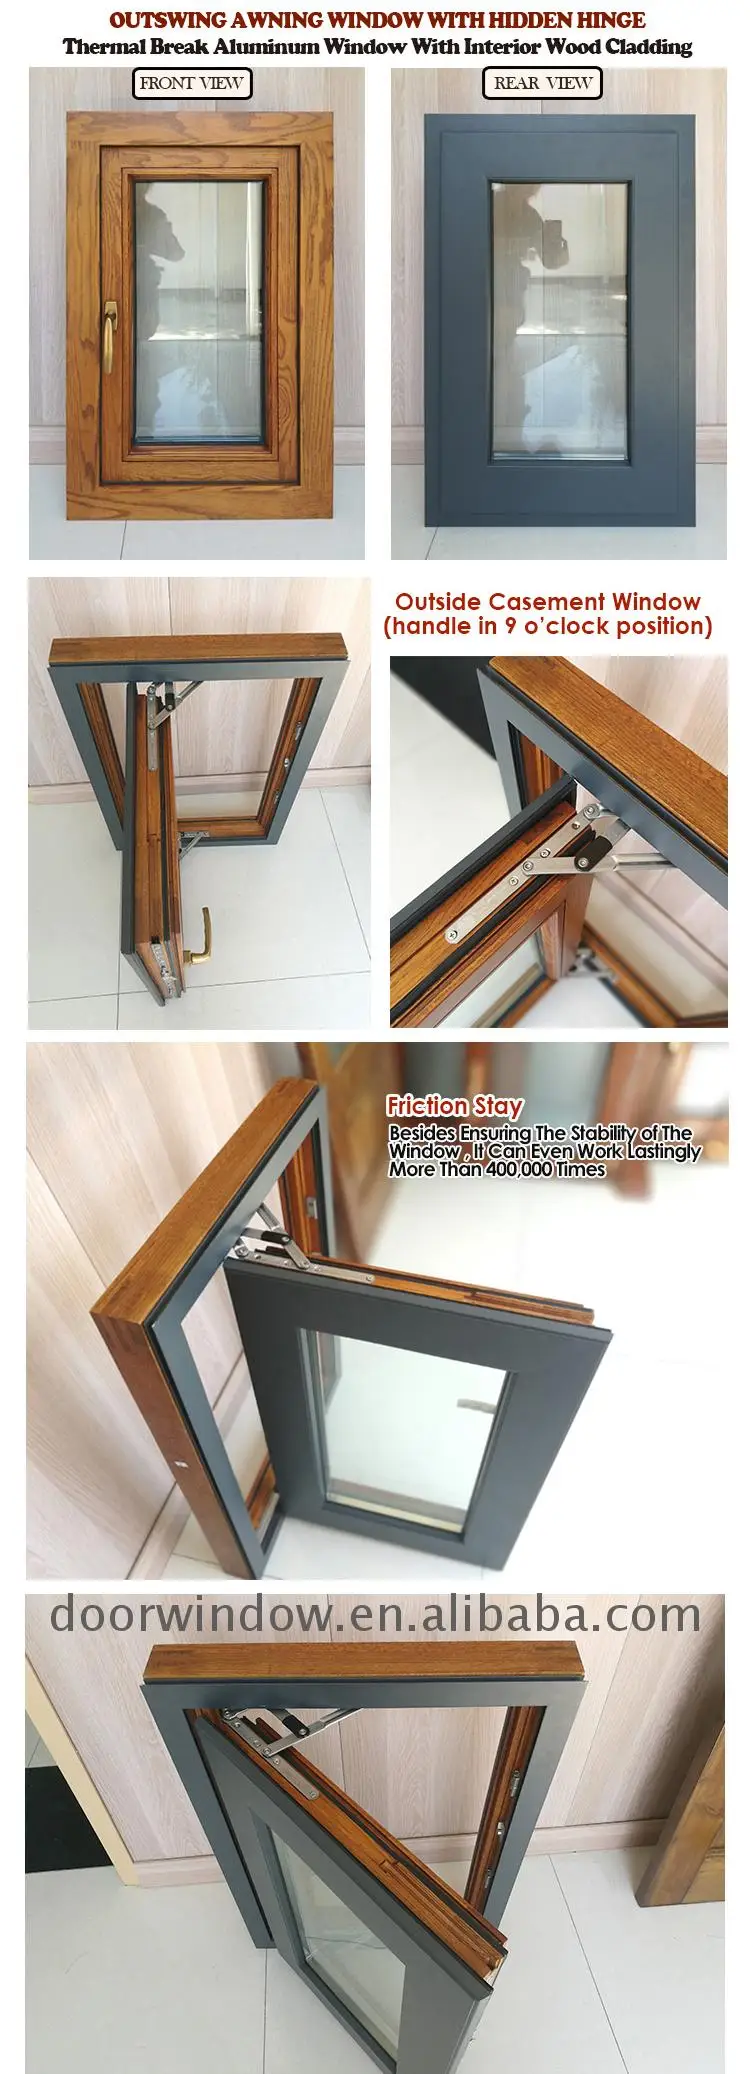 Wood grain finish aluminum window awning casement